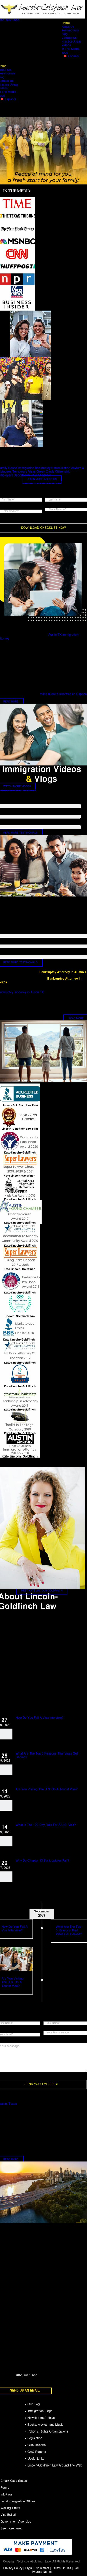 Lincoln-Goldfinch Law - Austin TX Lawyers